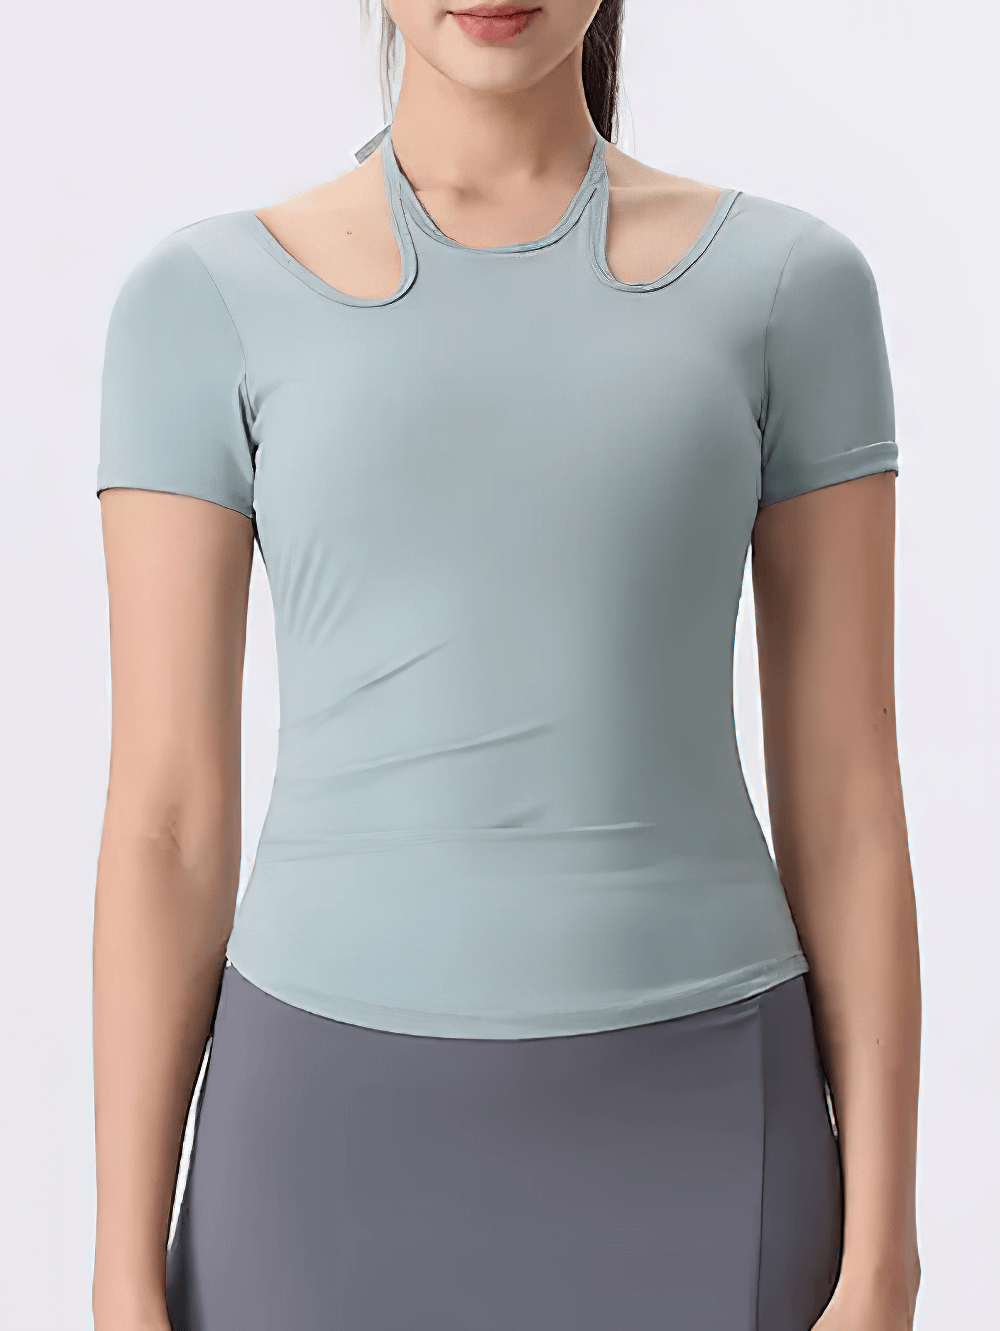 Women's Cross-Back Athletic Yoga T-Shirt - SF2108